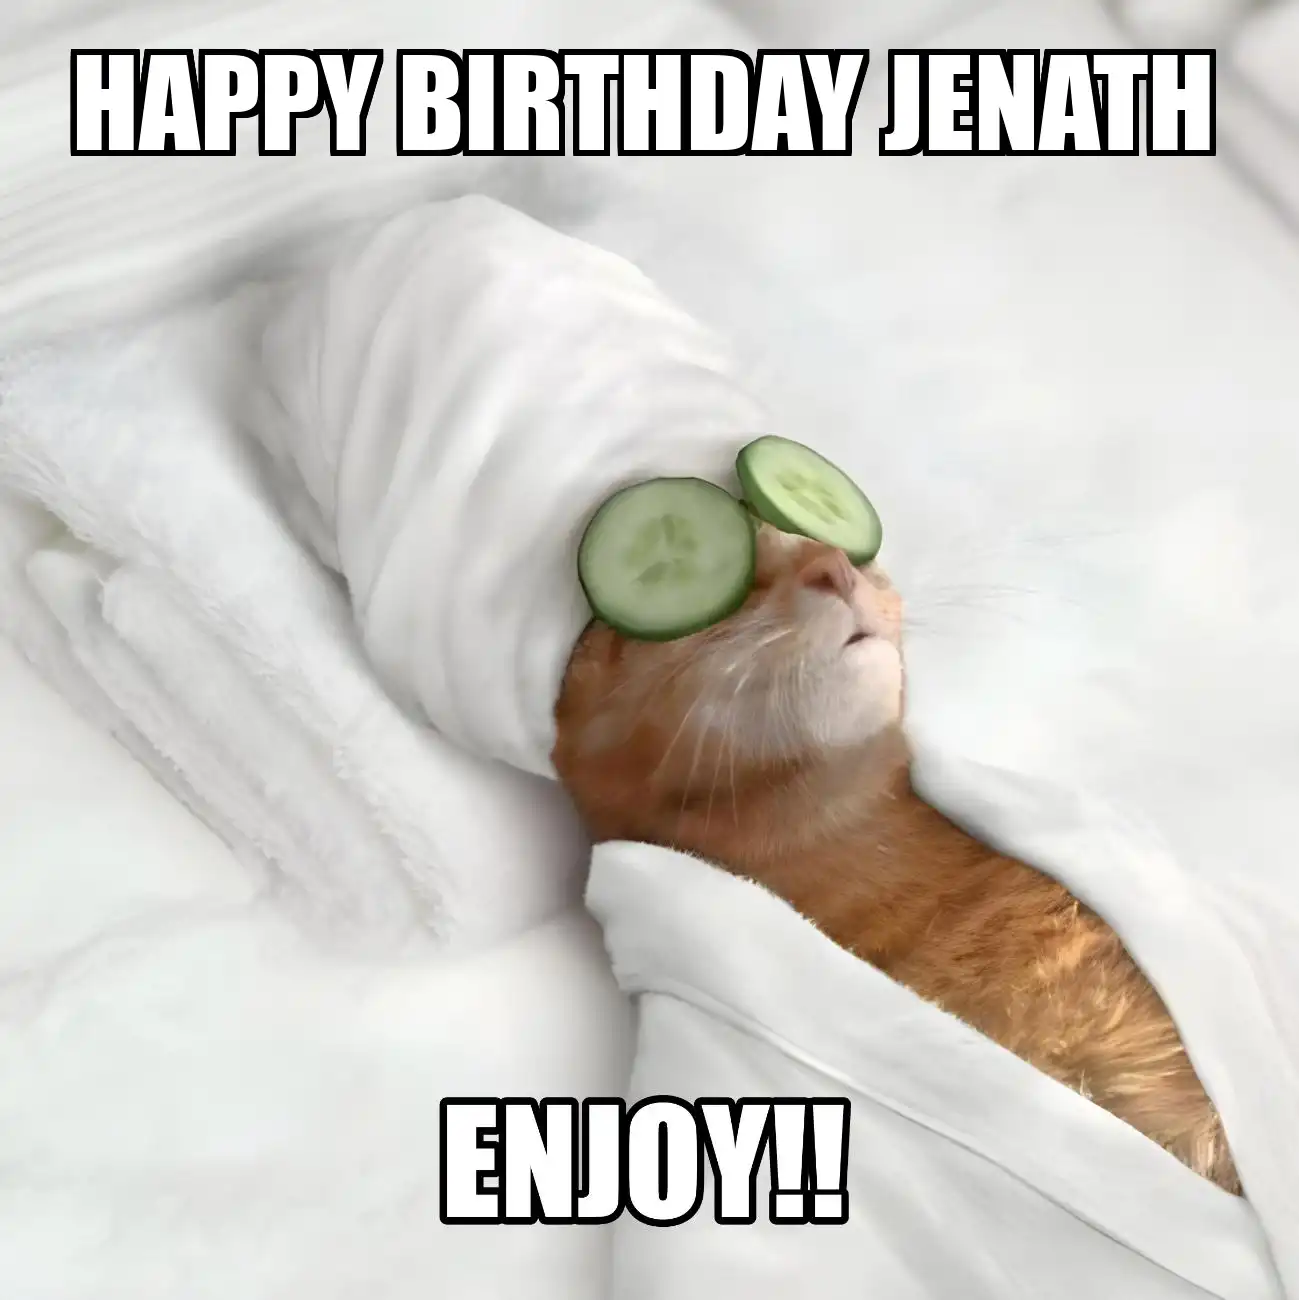 Happy Birthday Jenath Enjoy Cat Meme